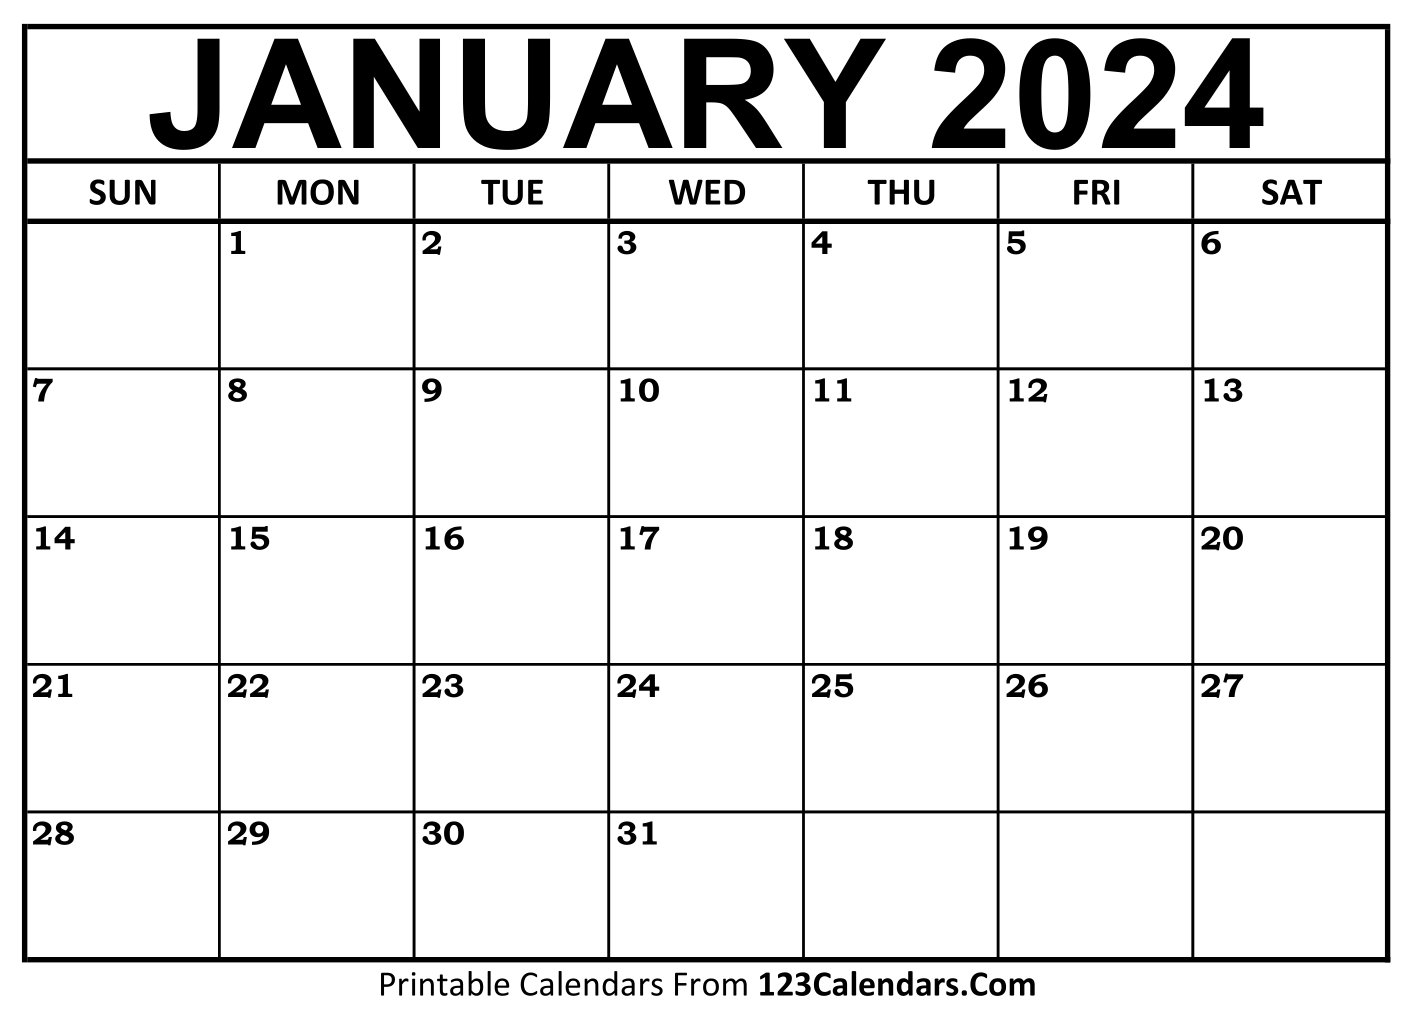 Printable January 2024 Calendar Templates - 123Calendars for Free Printable January 2024 Monthly Calendar